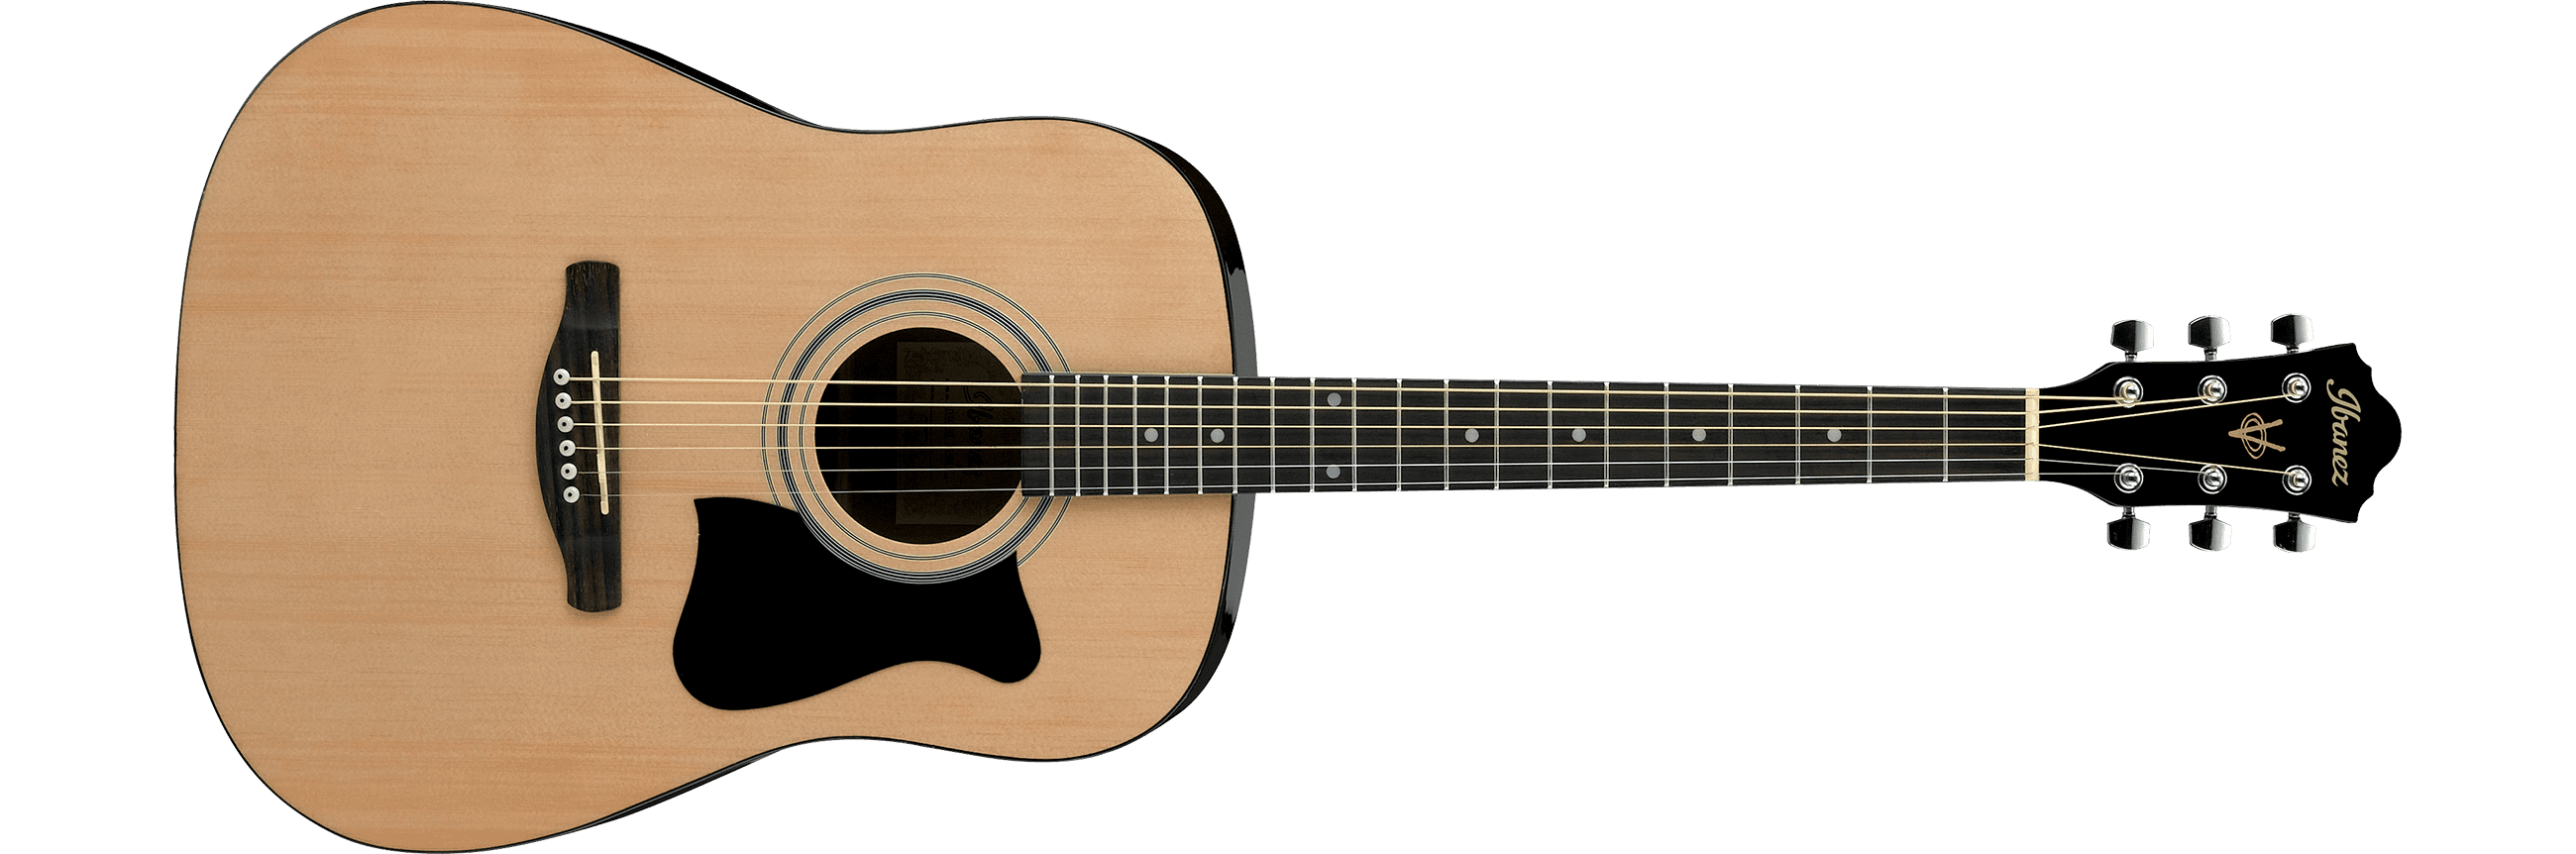 Ibanez IJV50 Dreadnought Quick Start Acoustic Guitar Jampack Includes Gigbag